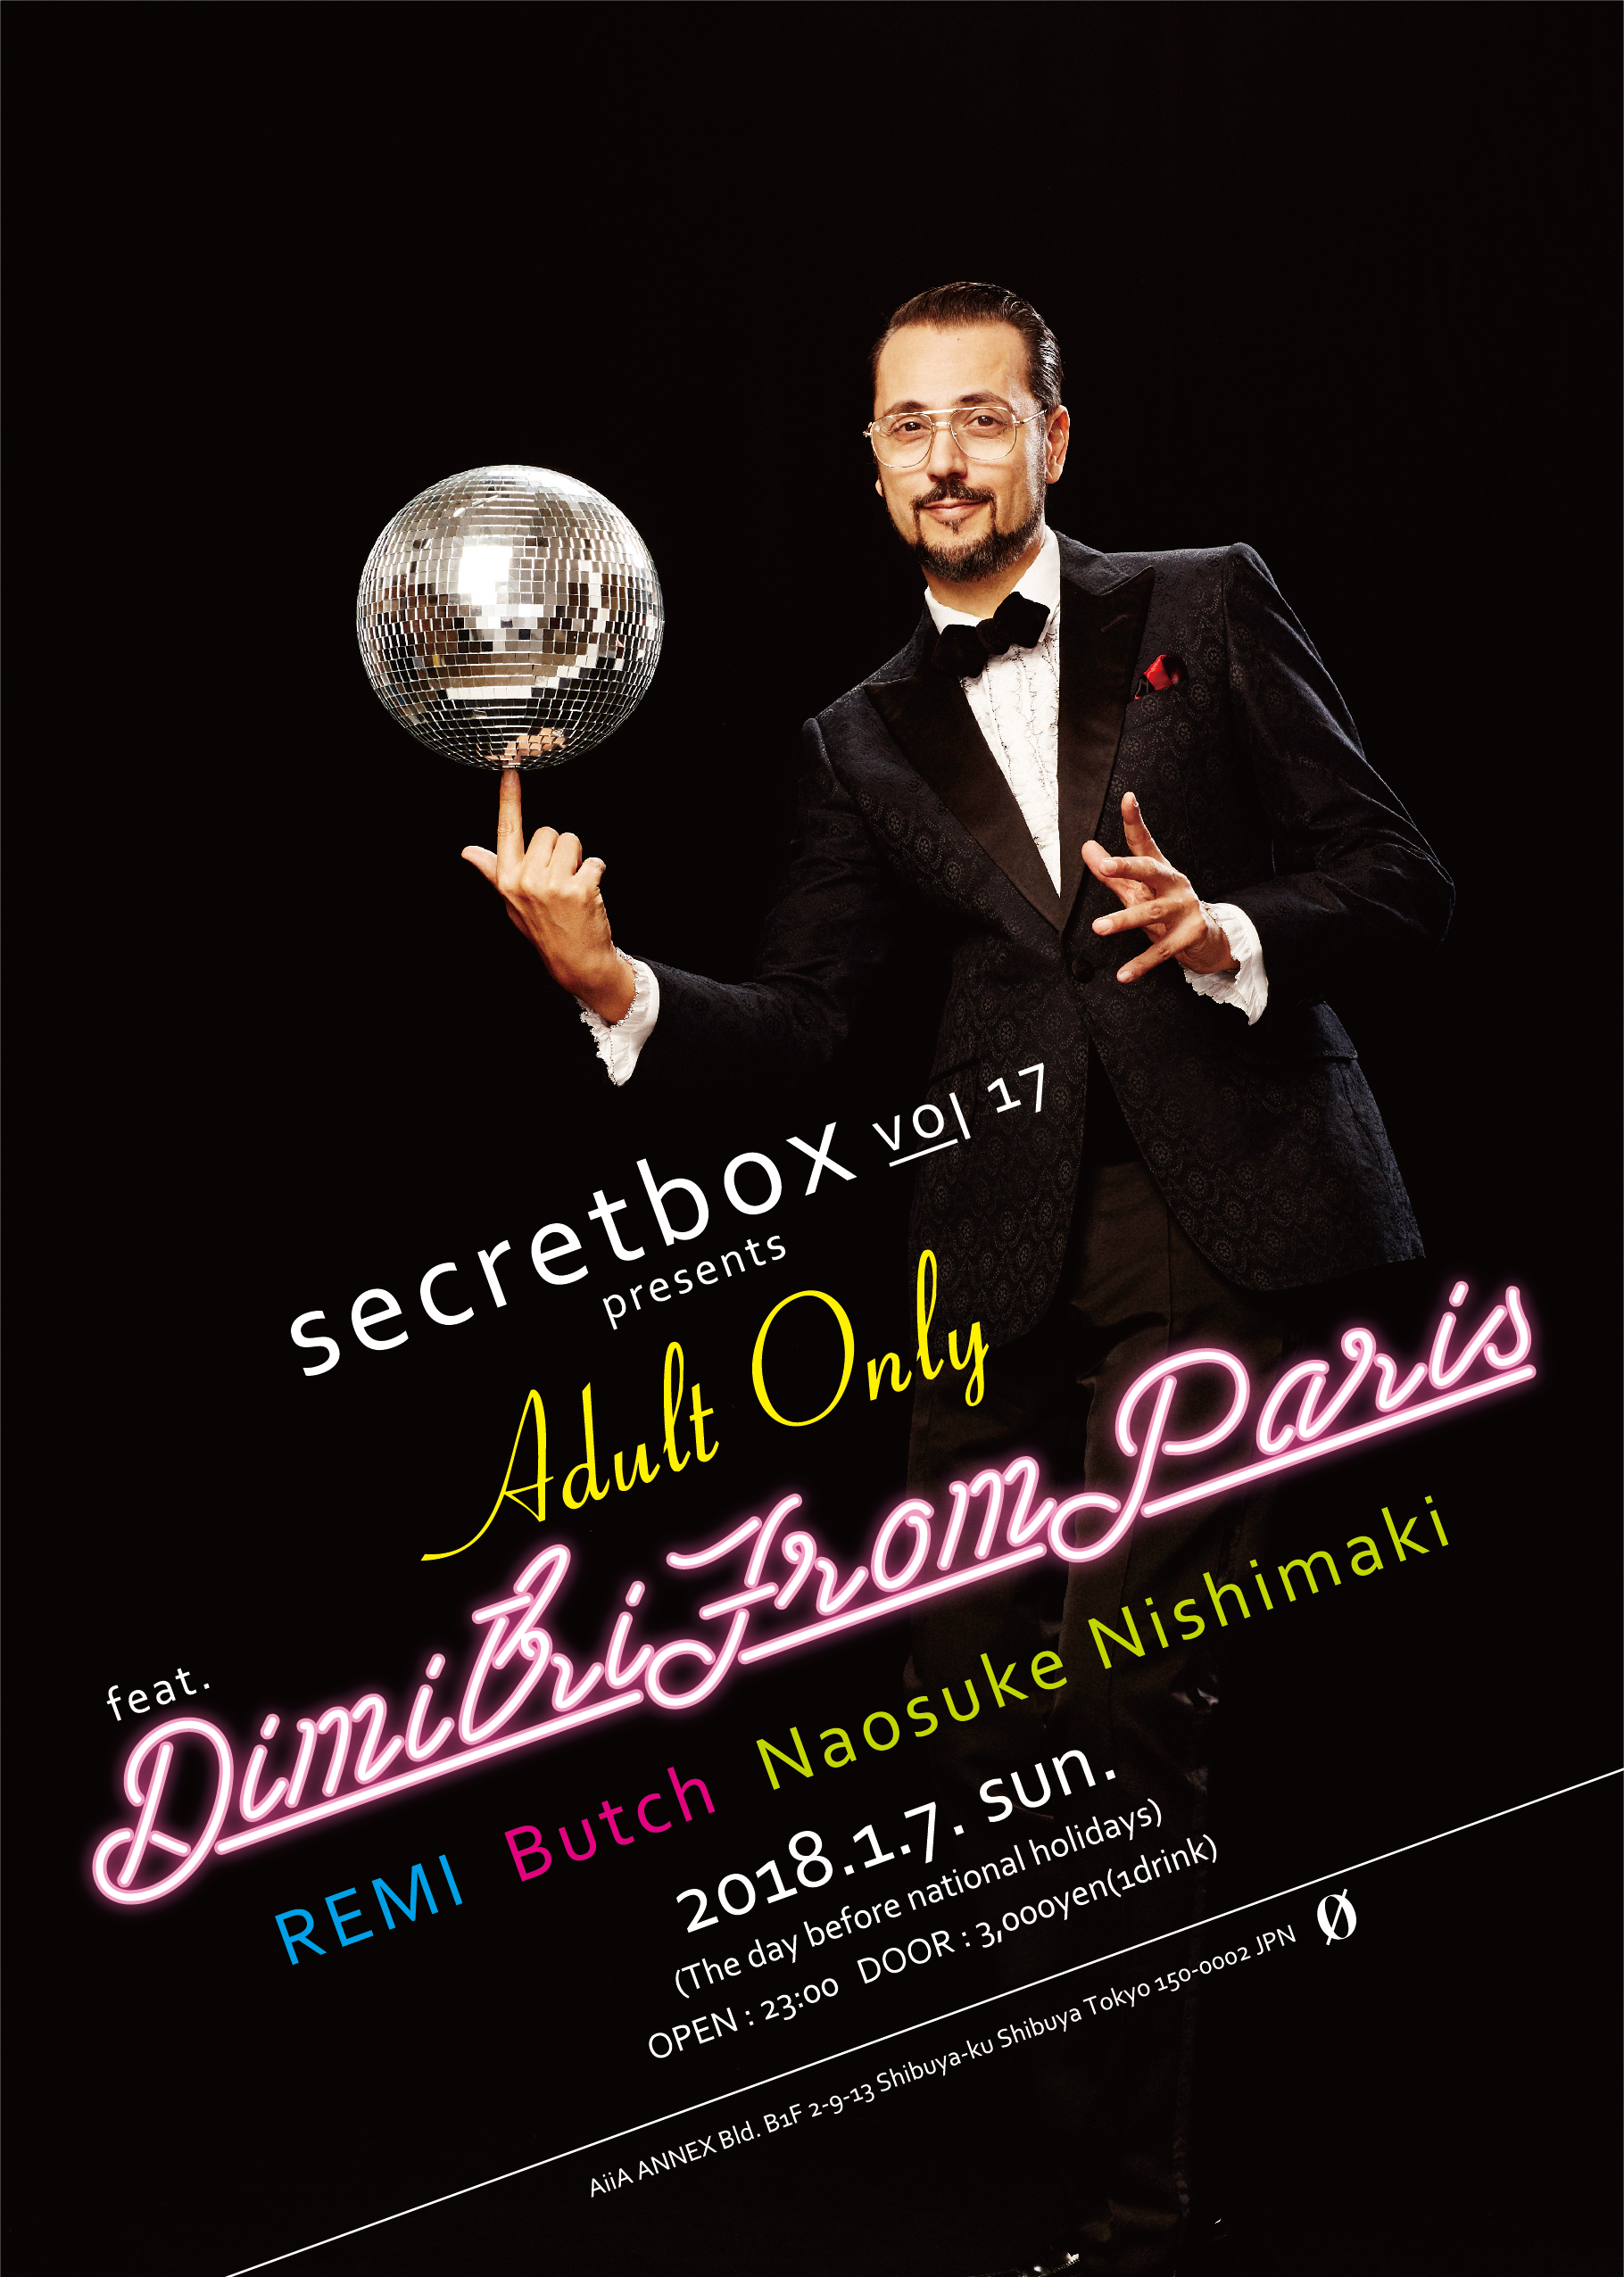 secretbox presents… Adult Only